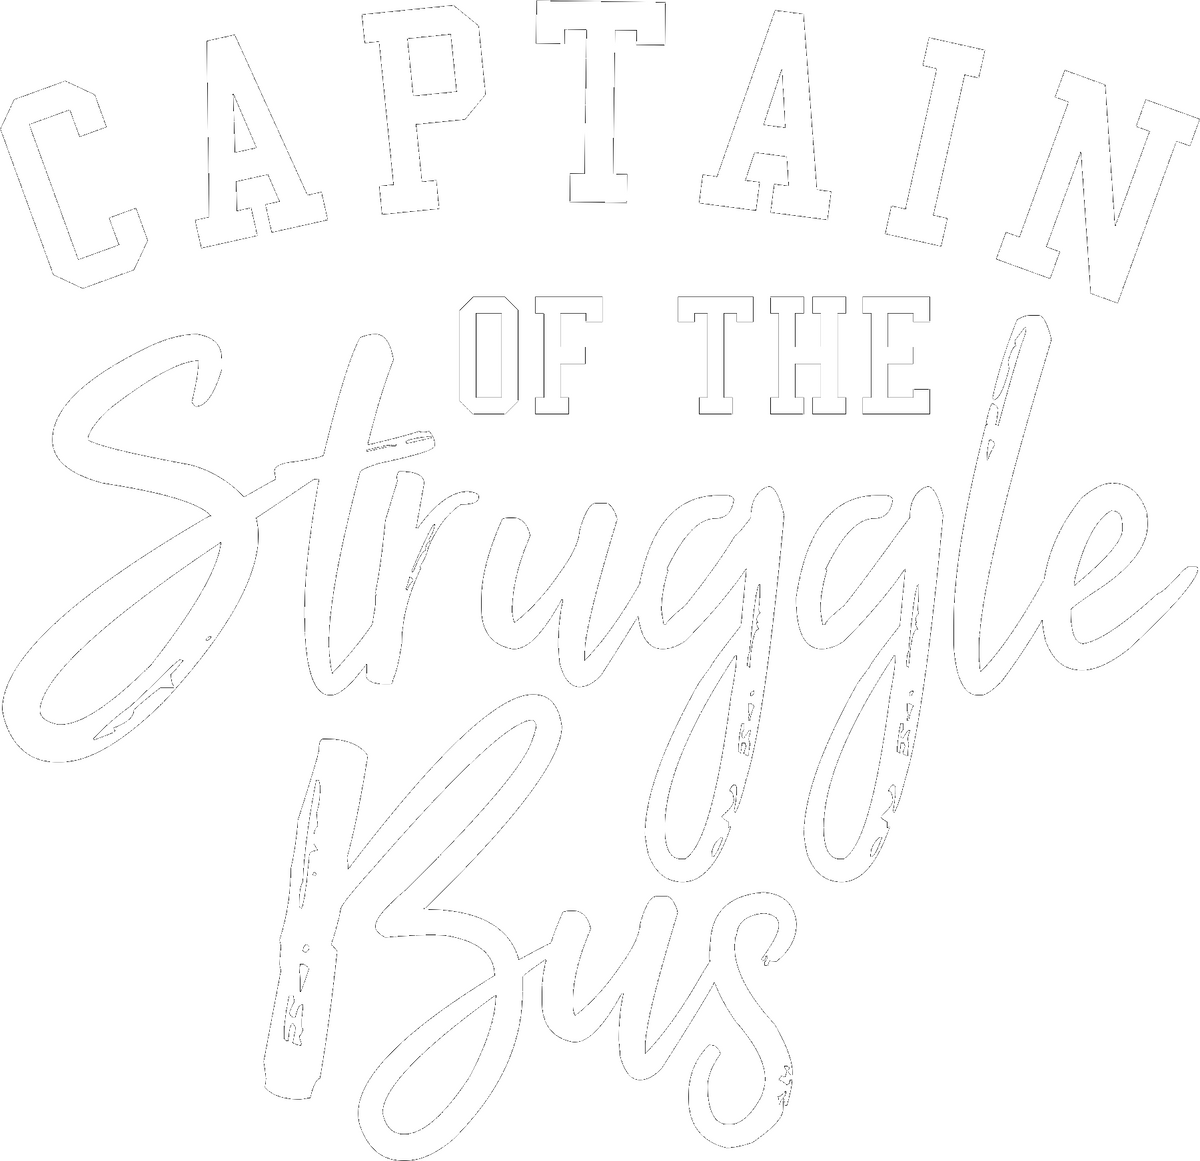 Captain of the Struggle Bus Sassy t-shirt